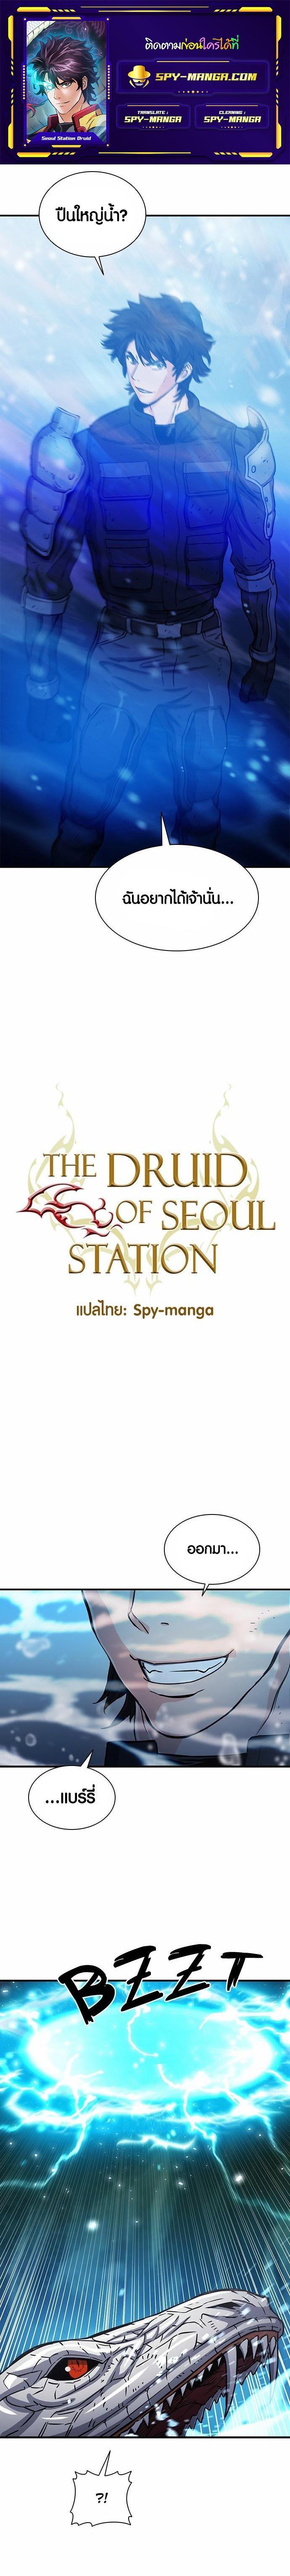 Seoul Station Druid 108 01